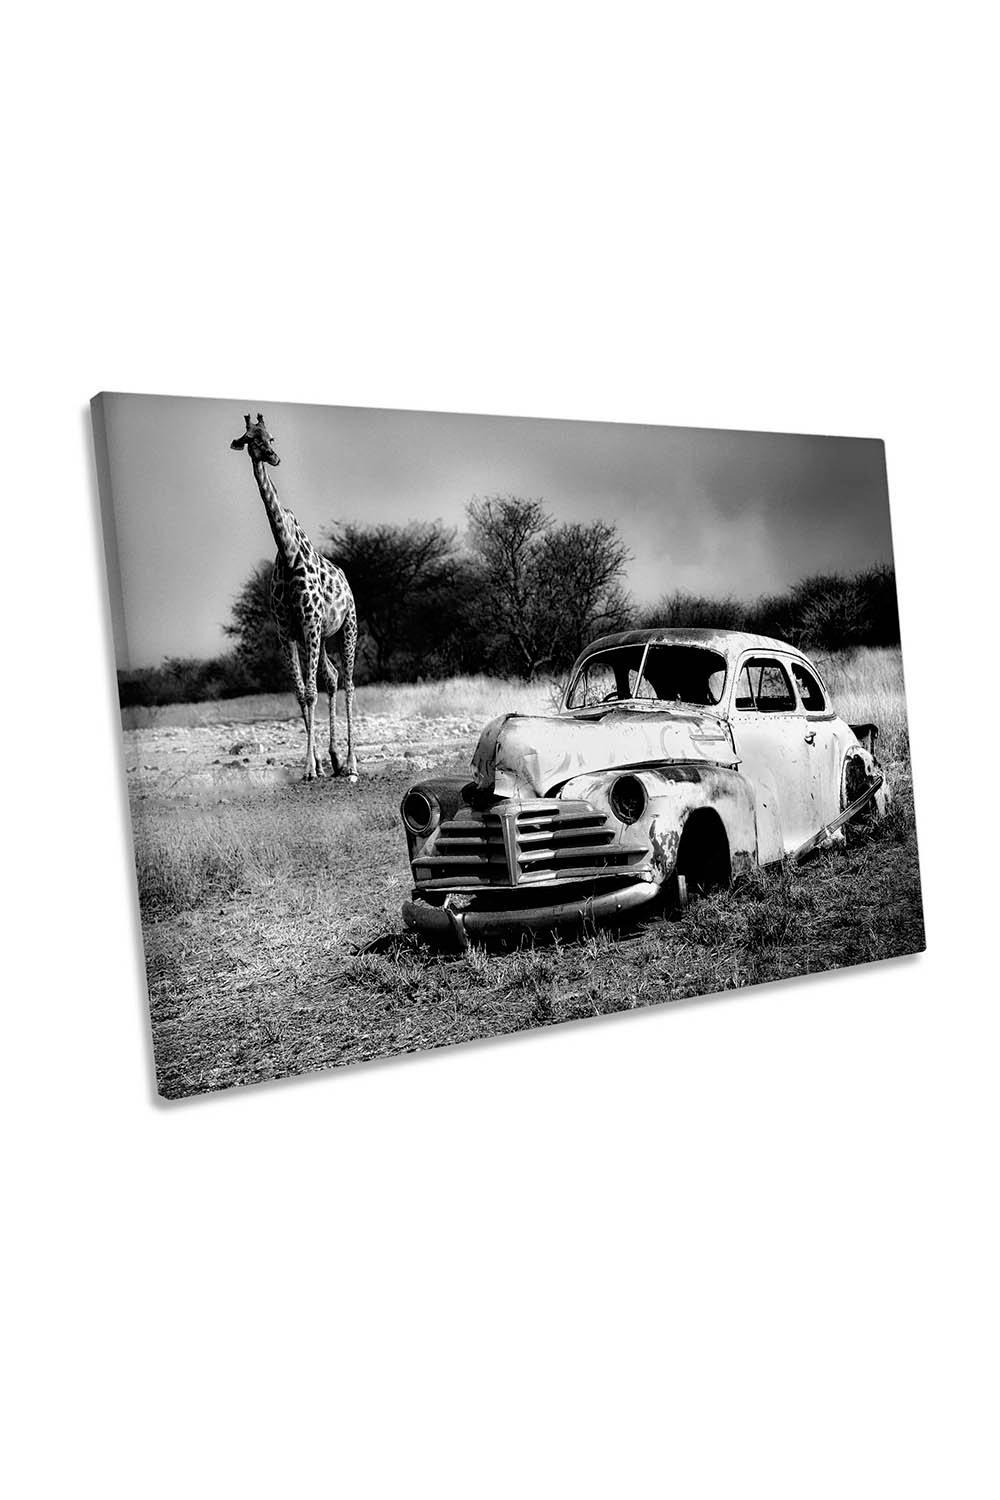 Acquaintance Car Wreck Giraffe Canvas Wall Art Picture Print